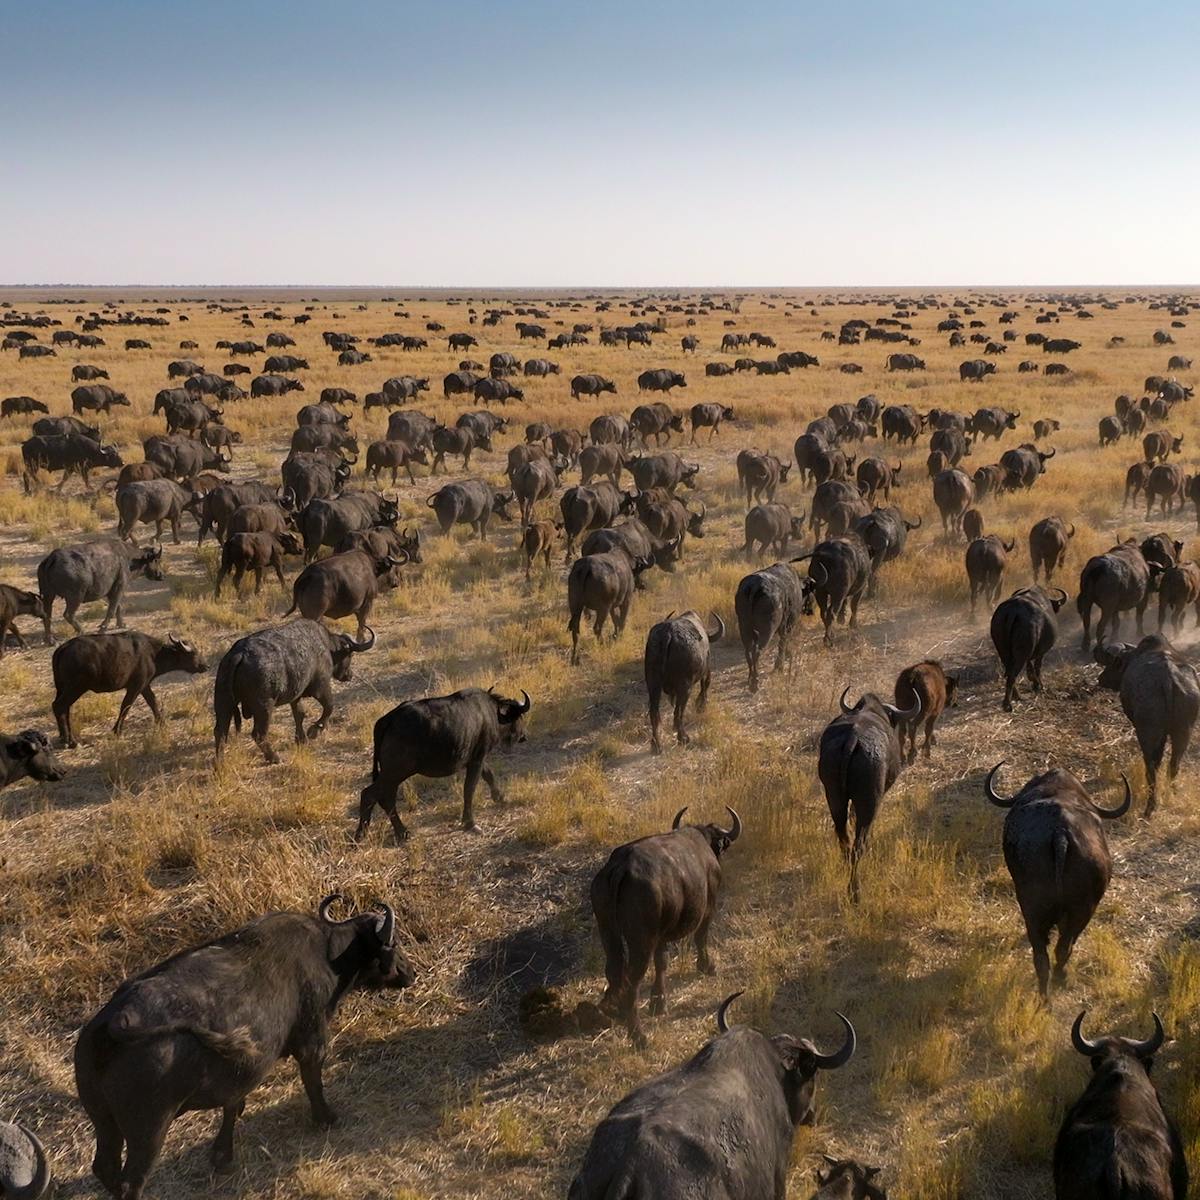 A herd of cattle walk across a dry, grassy area.